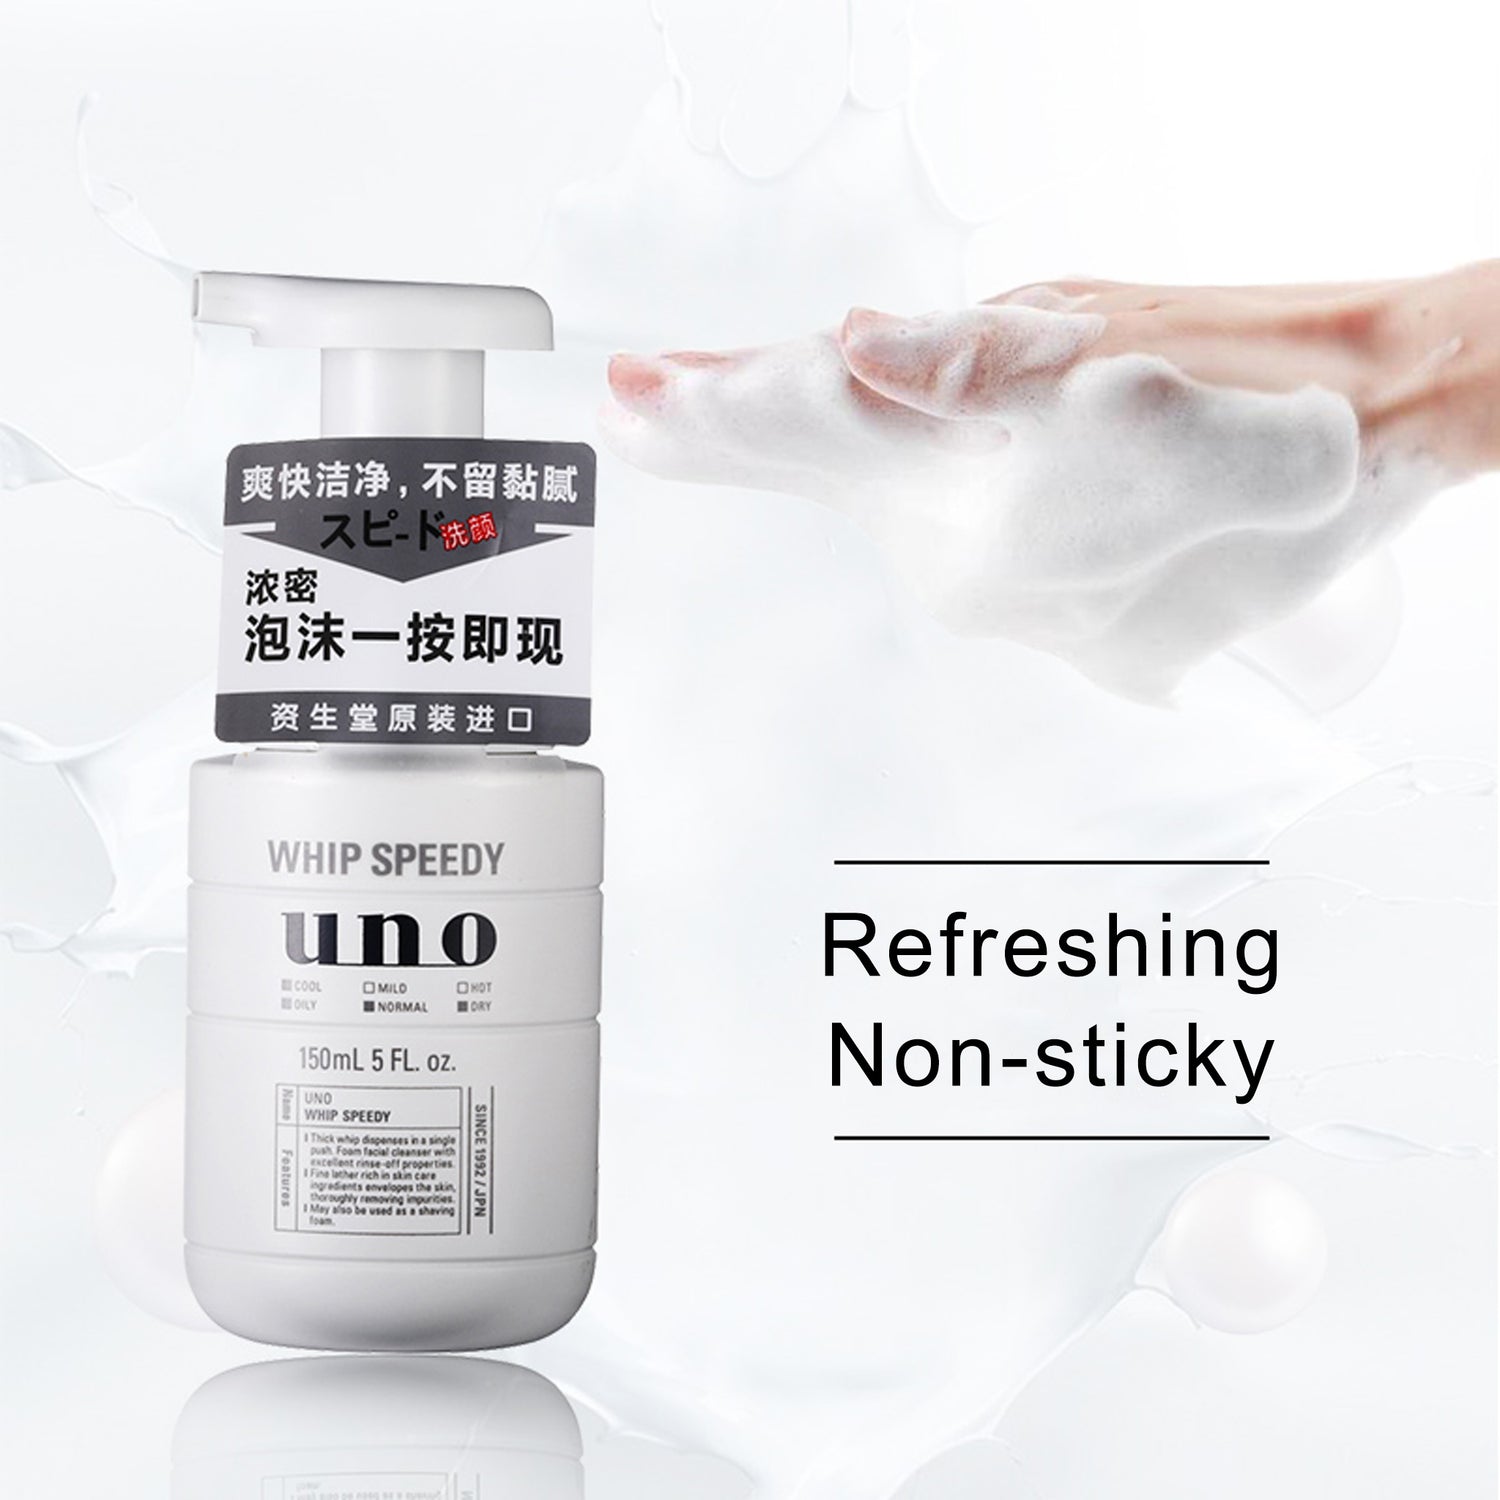 Shiseido-Uno Whip Speedy Facial Foam Cleanser-150ml